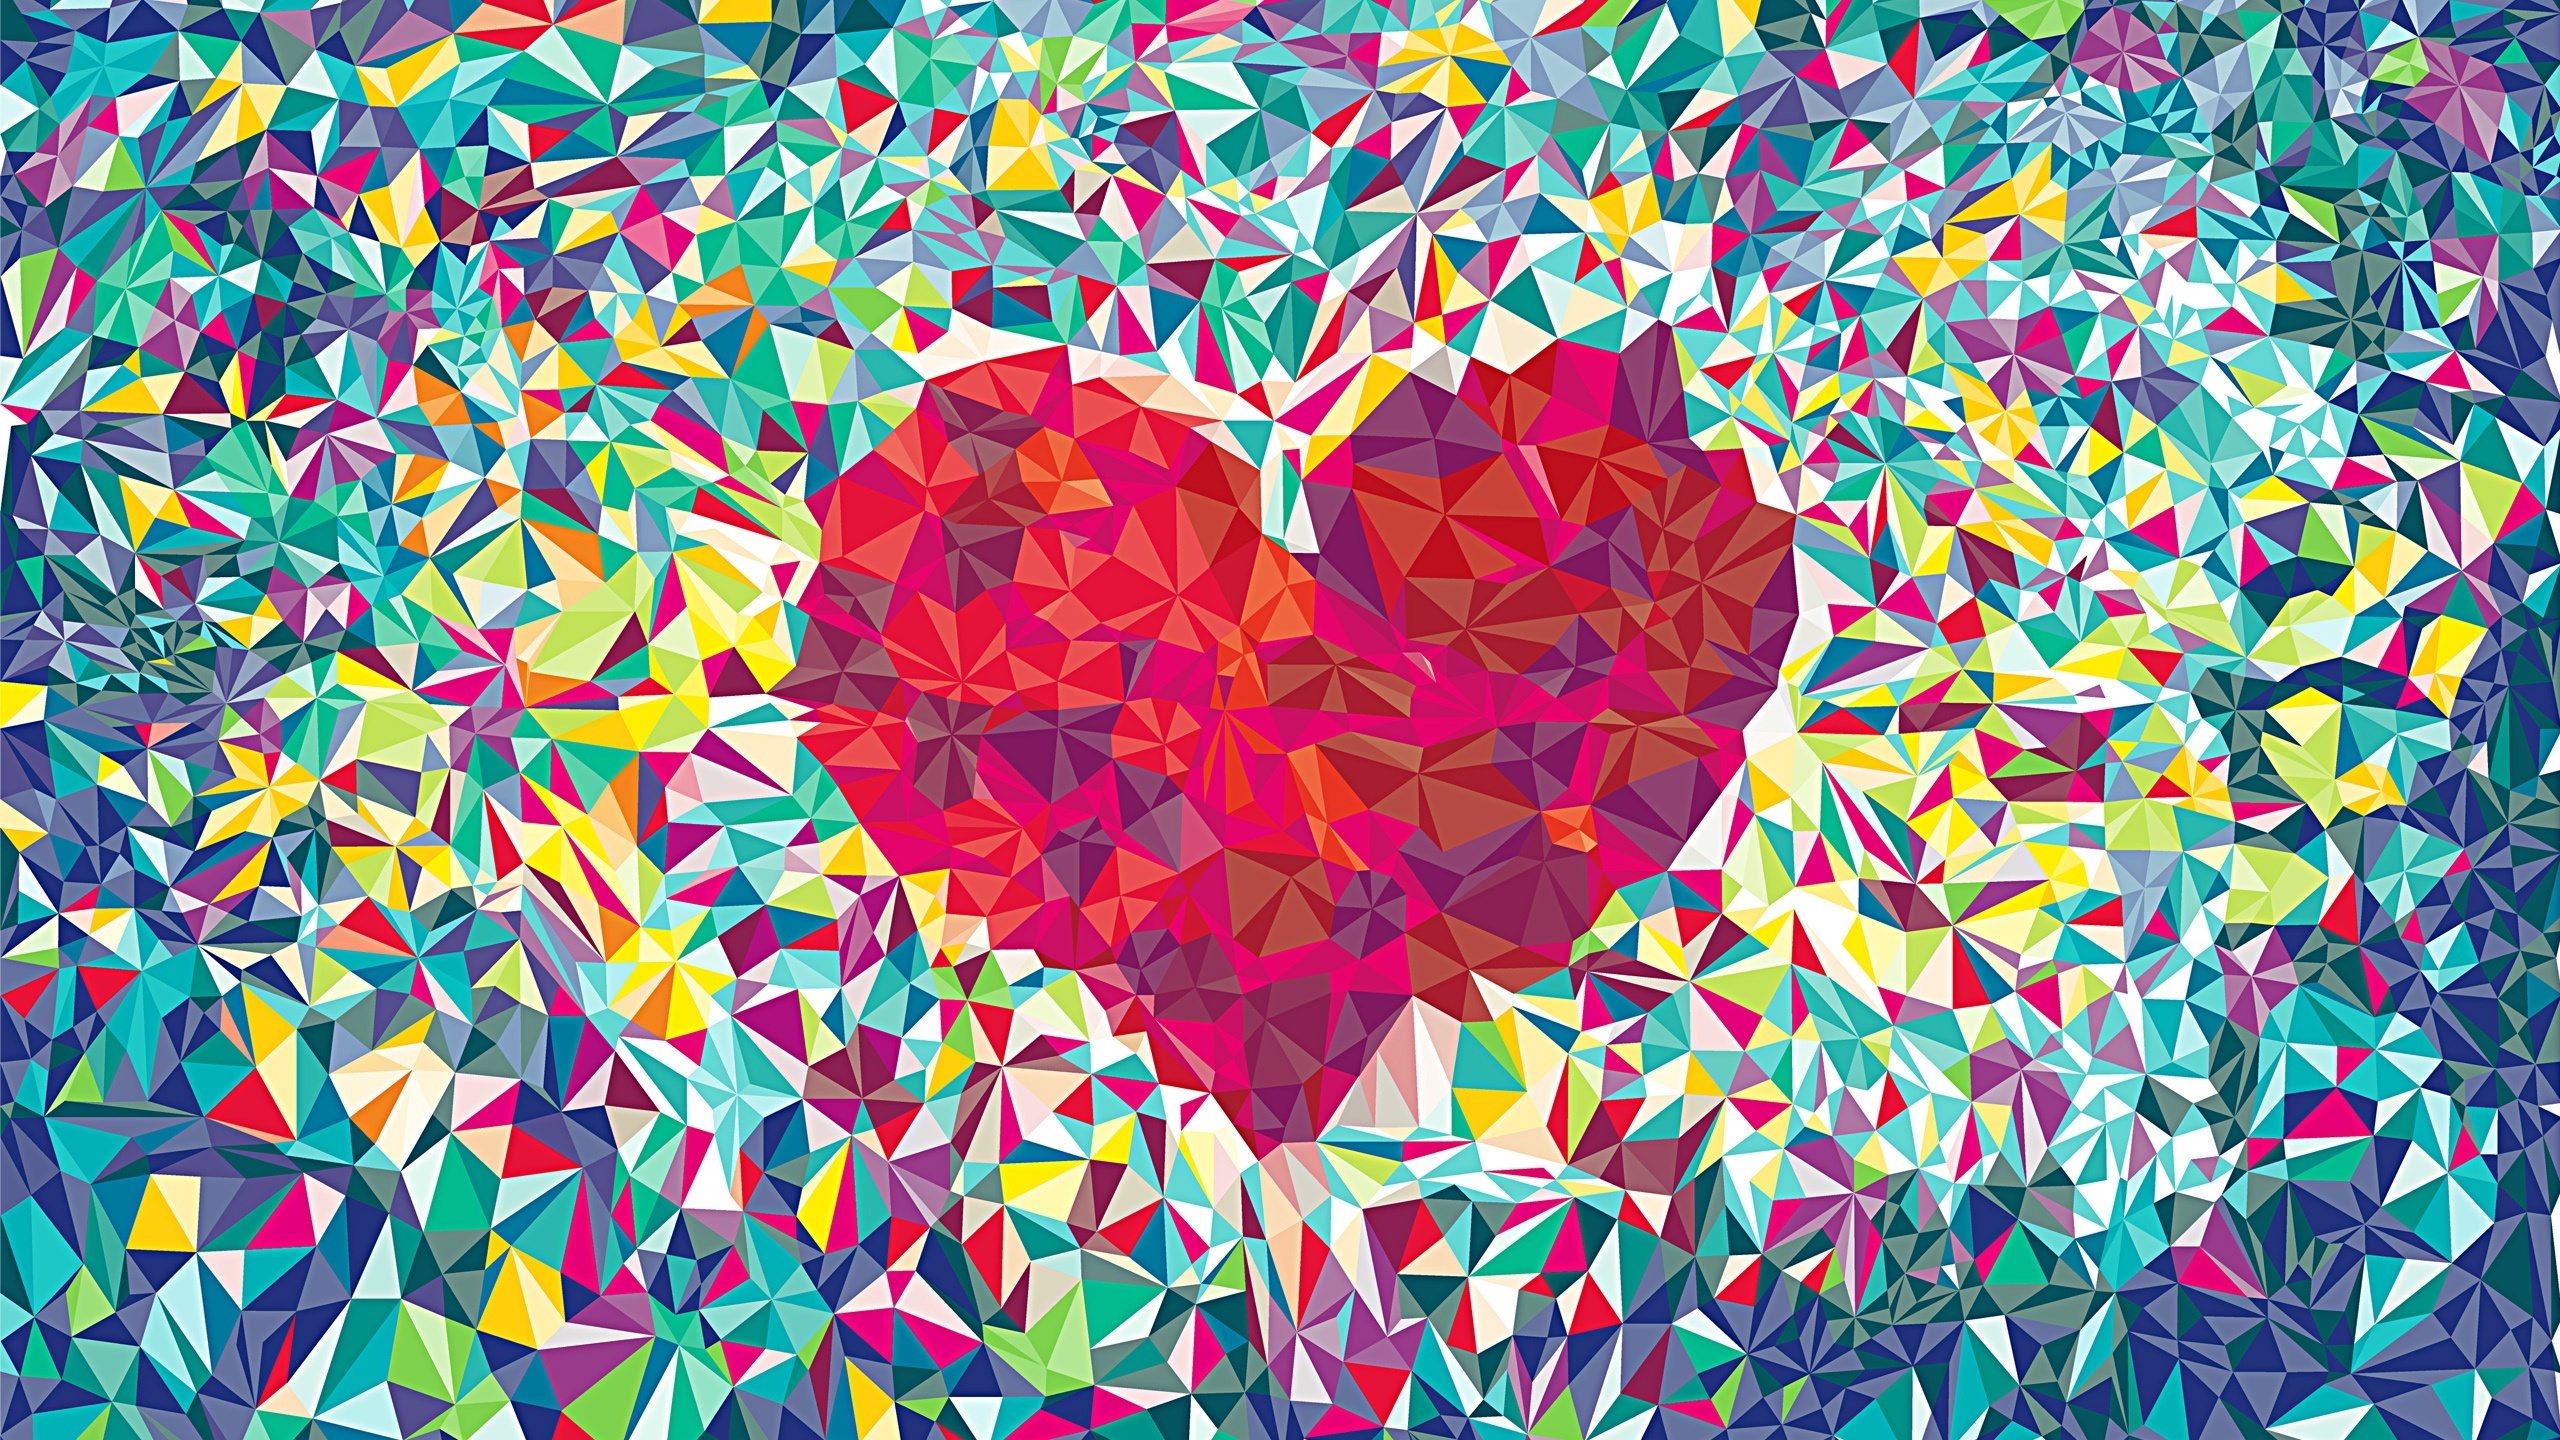 Pixel Heart Love Abstruct Wallpaper 2560 1440 Abstract Hd Wallpapers